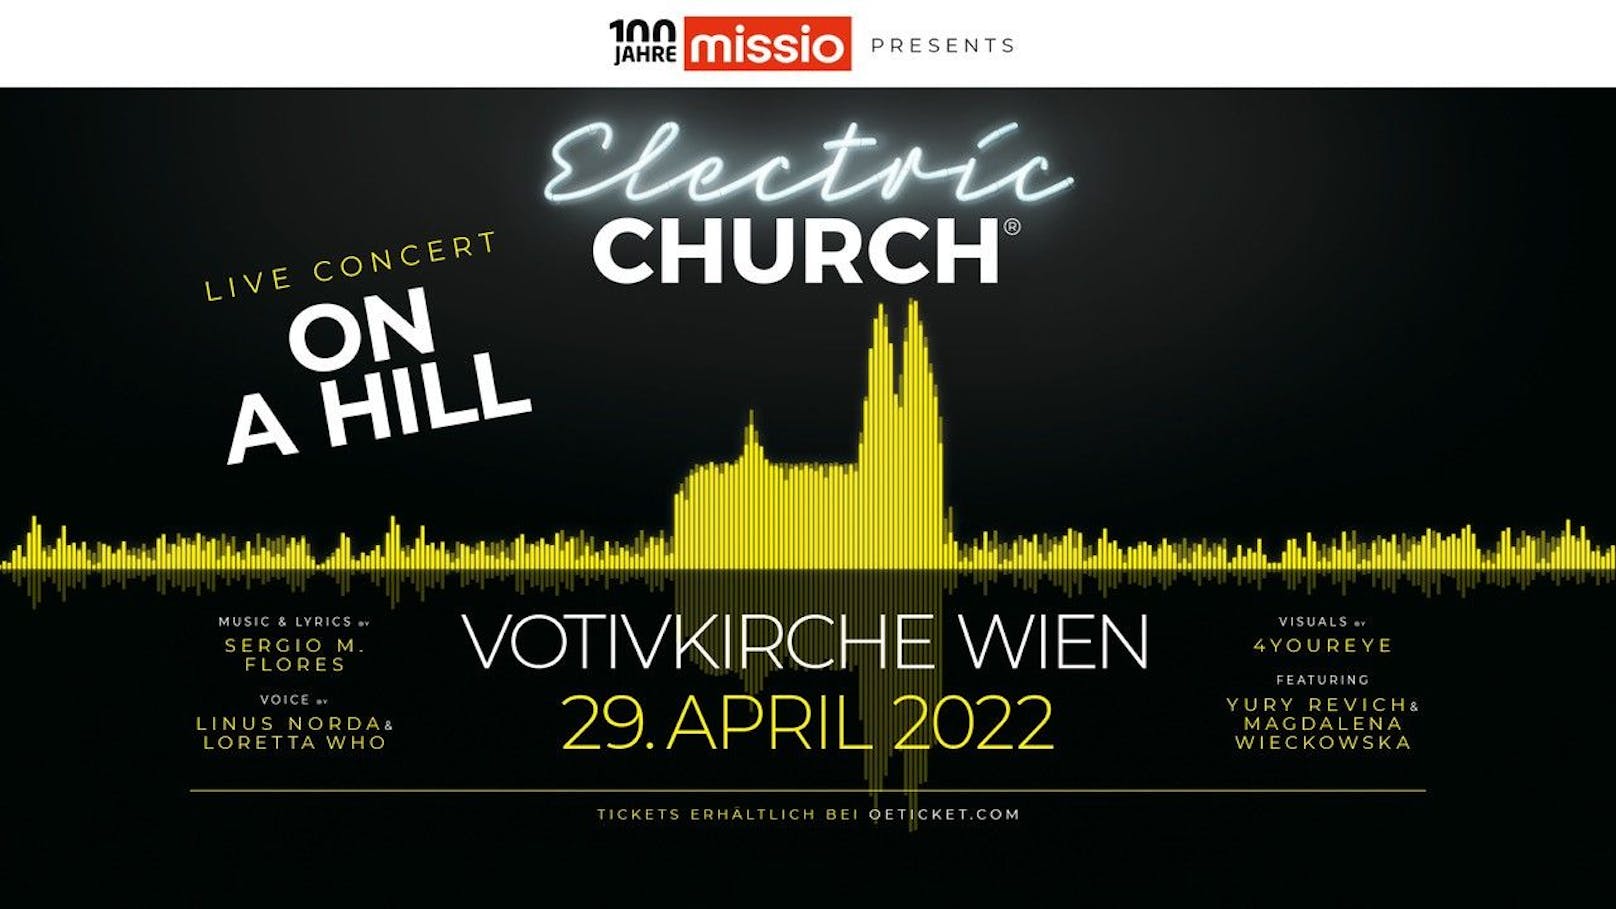 Electric Church bringt die Votiv Kirche am 29. April zum Beben!